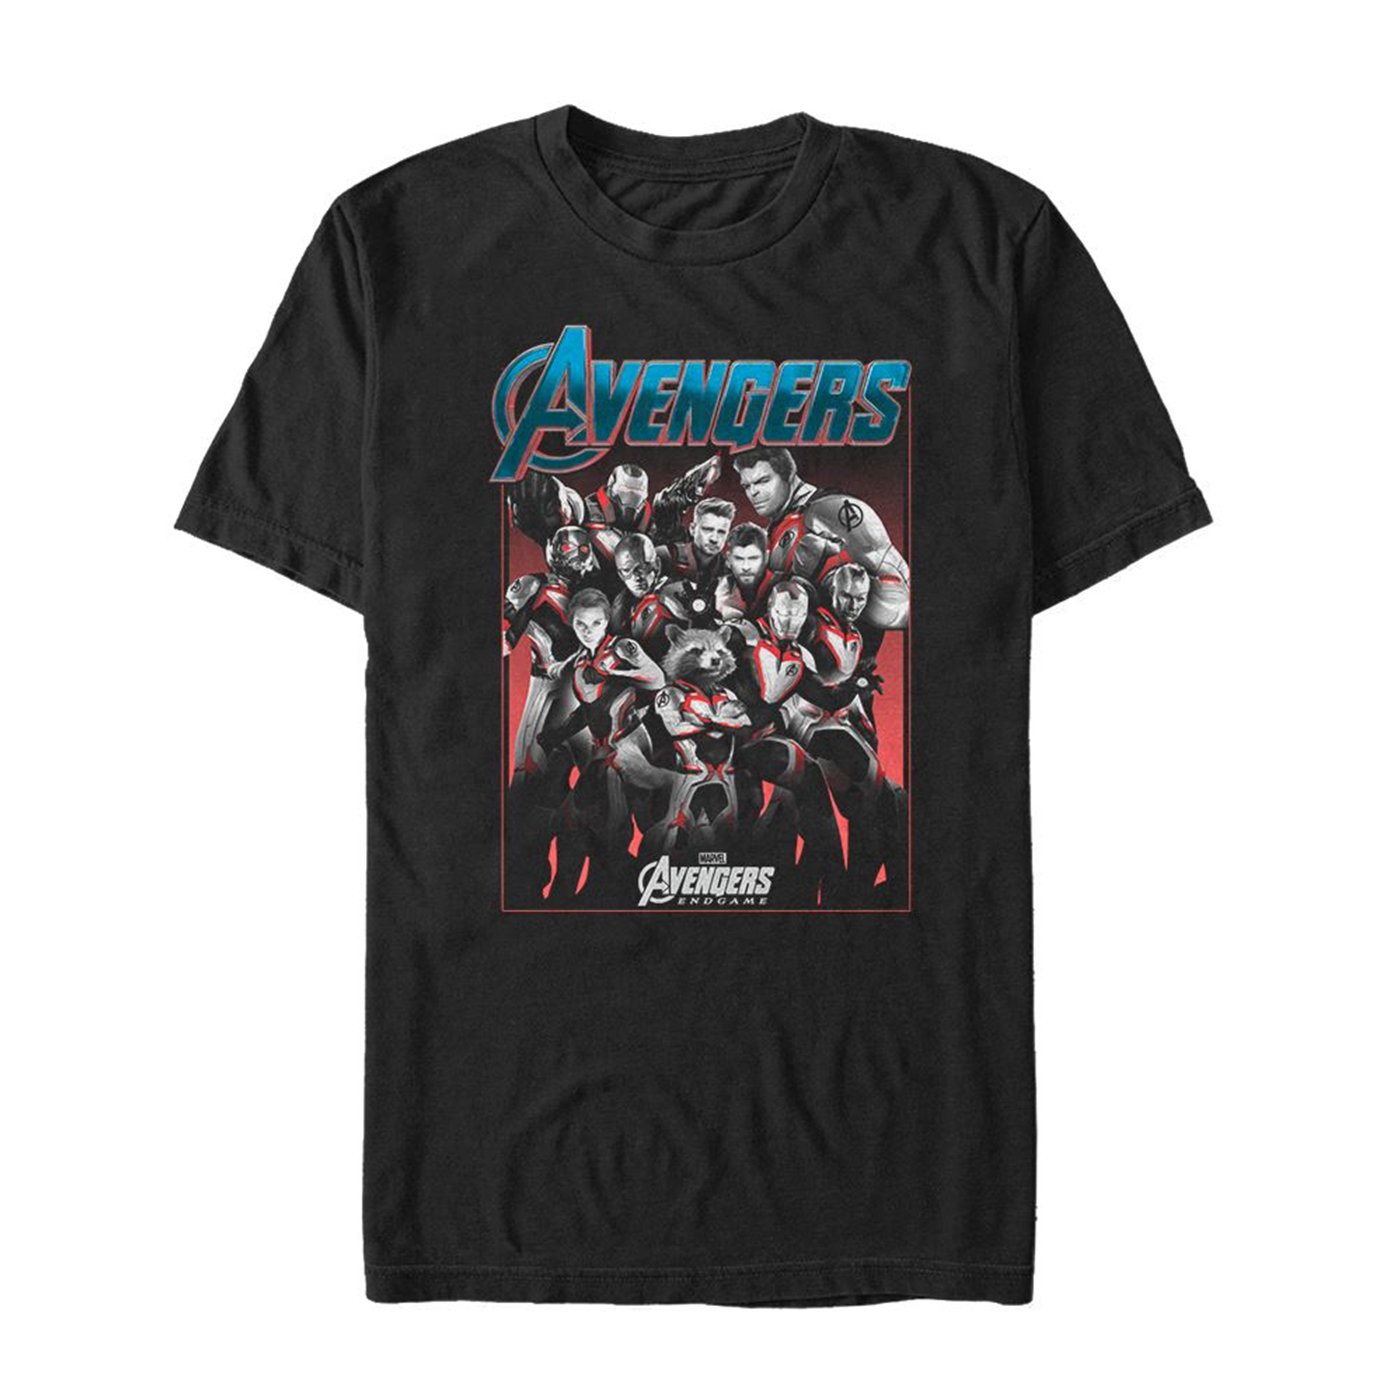 Avengers Endgame Squad Group Shot Men's T-Shirt